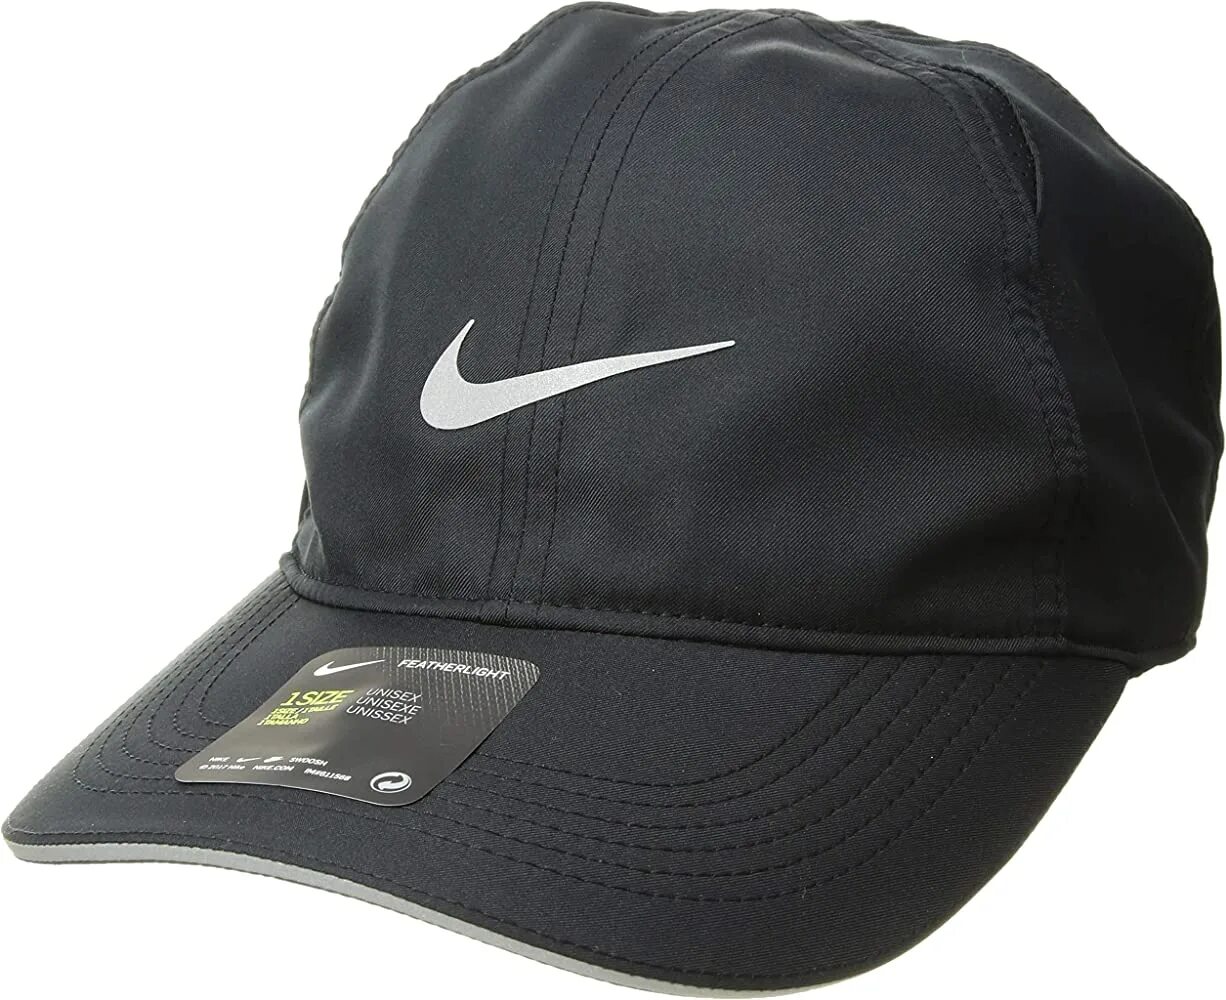 Nike Reflective AEROBILL cap. Nike Dri Fit cap 2010. Бейсболка Nike Featherlight. Кепка Nike Featherlight.